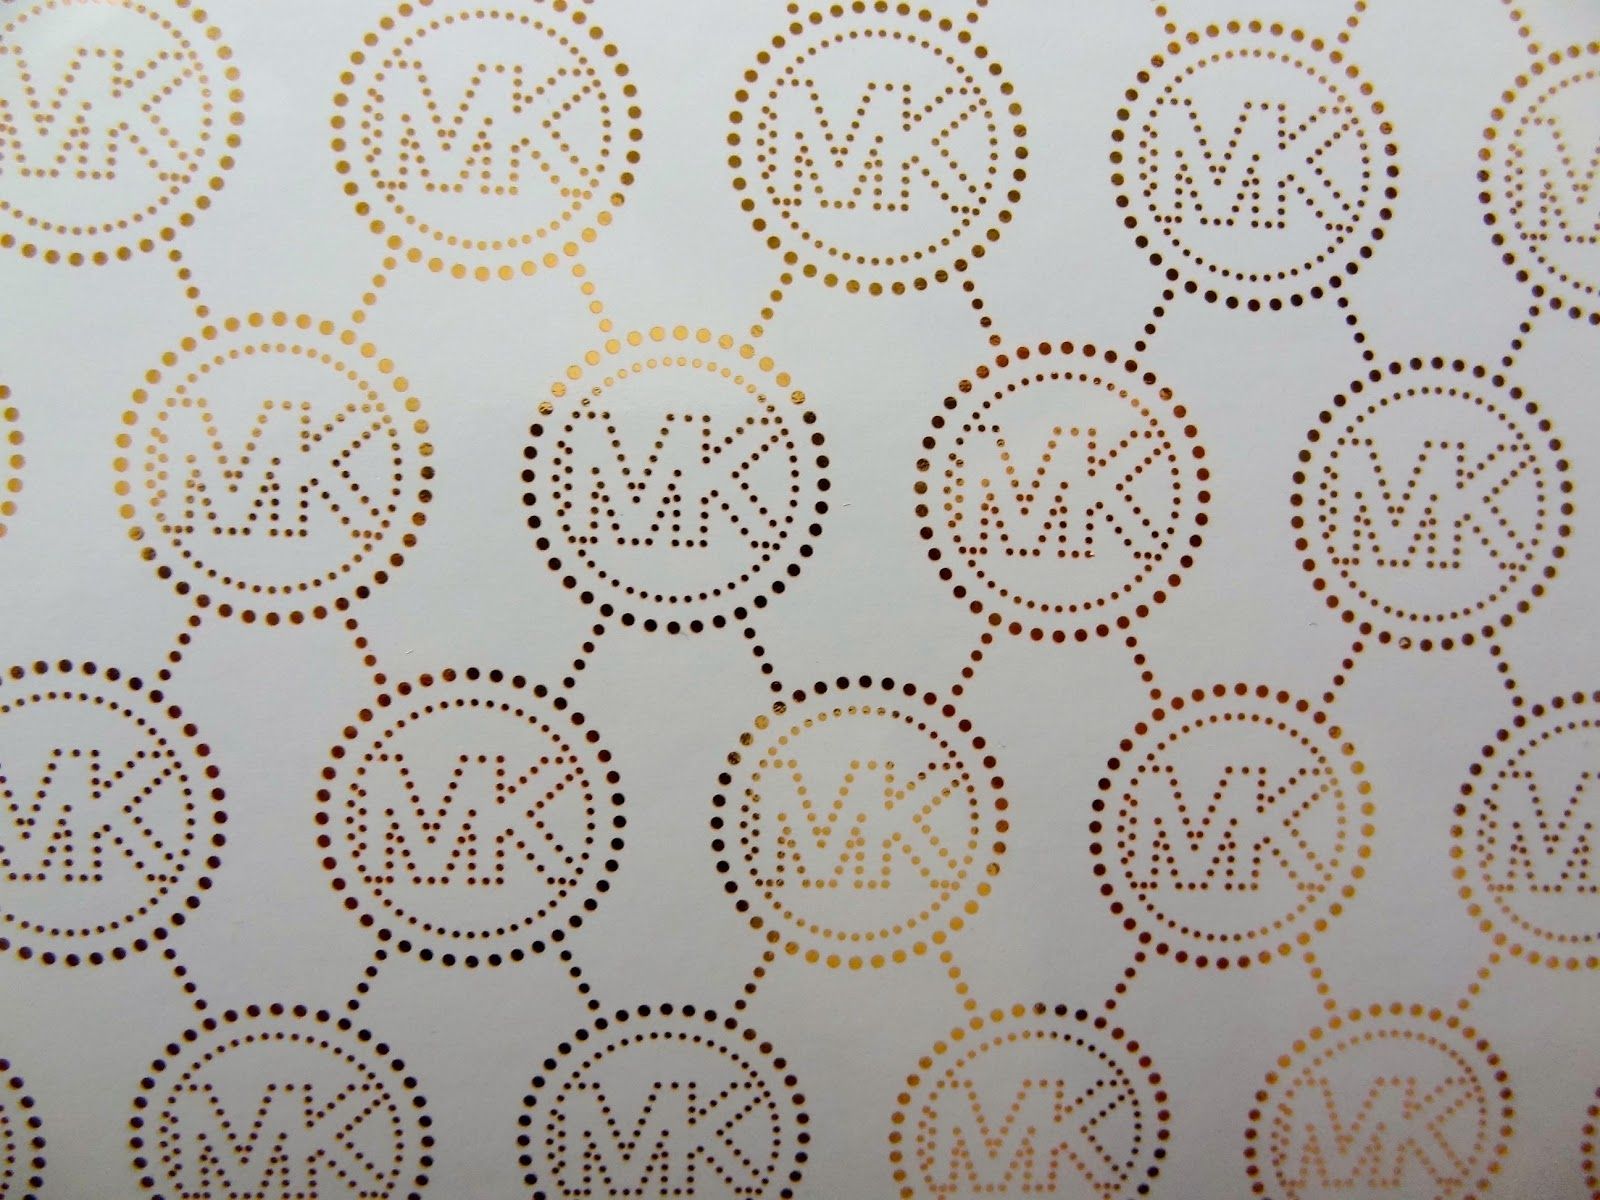 Michael Kors Logo Pink Wallpapers